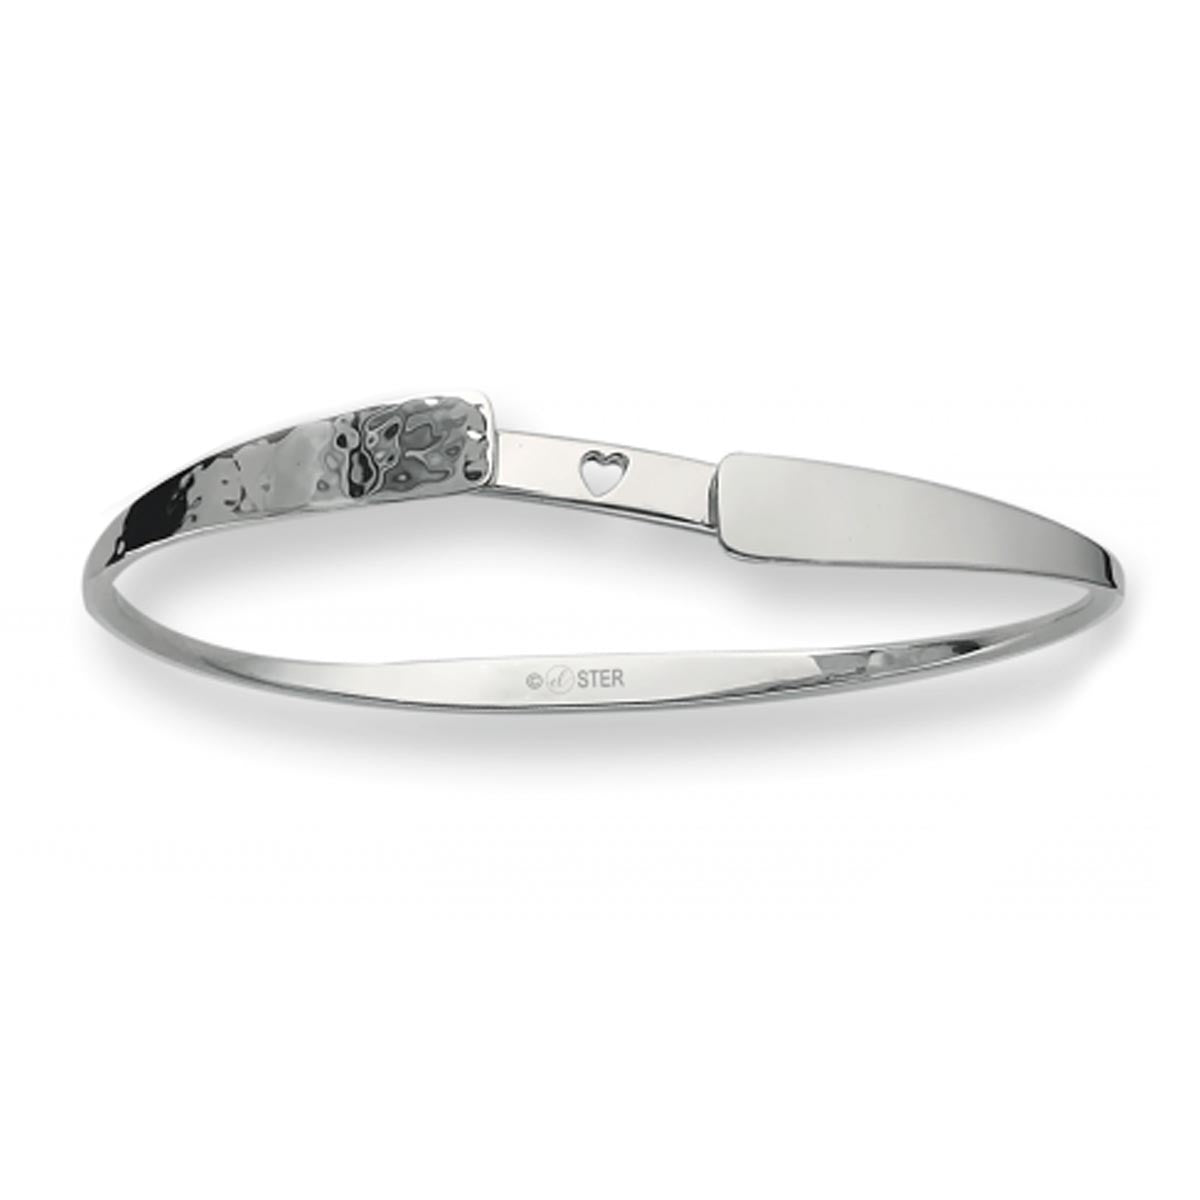 E.L. Designs Secret Heart Bangle Bracelet in Sterling Silver (7 inches)